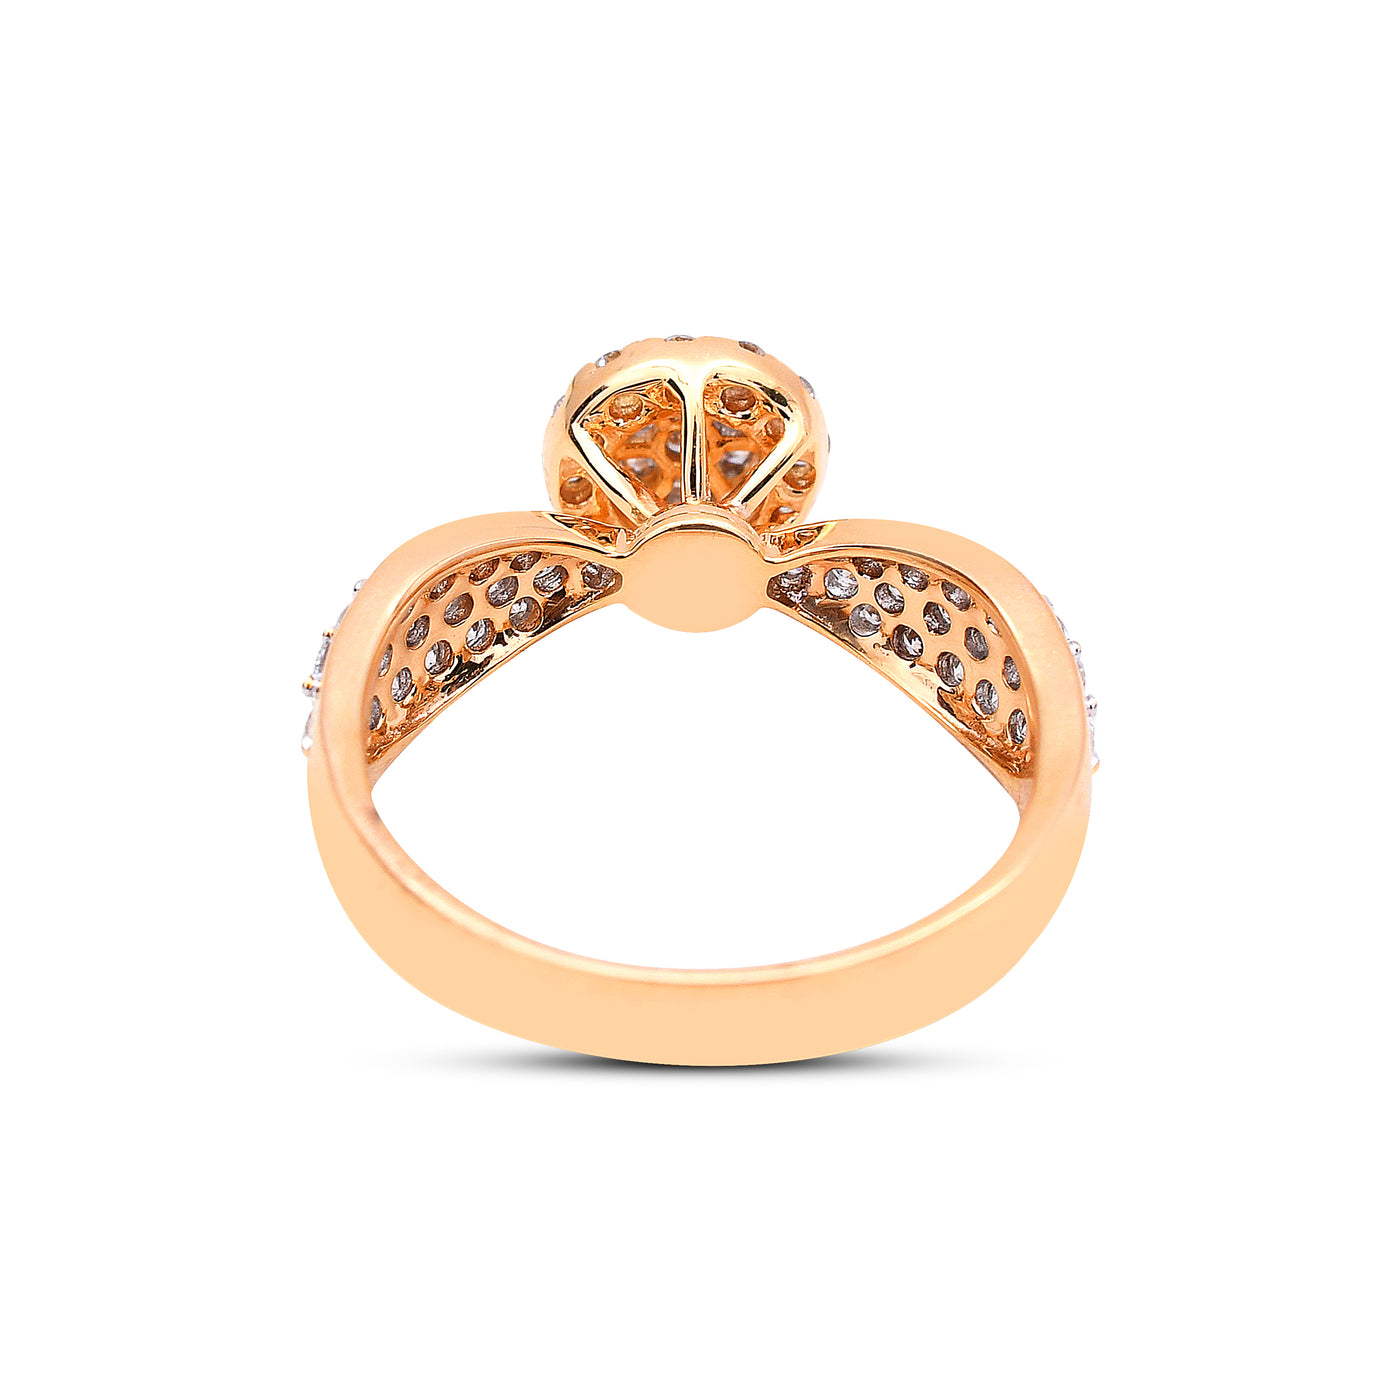 The Crown Diamond Ring